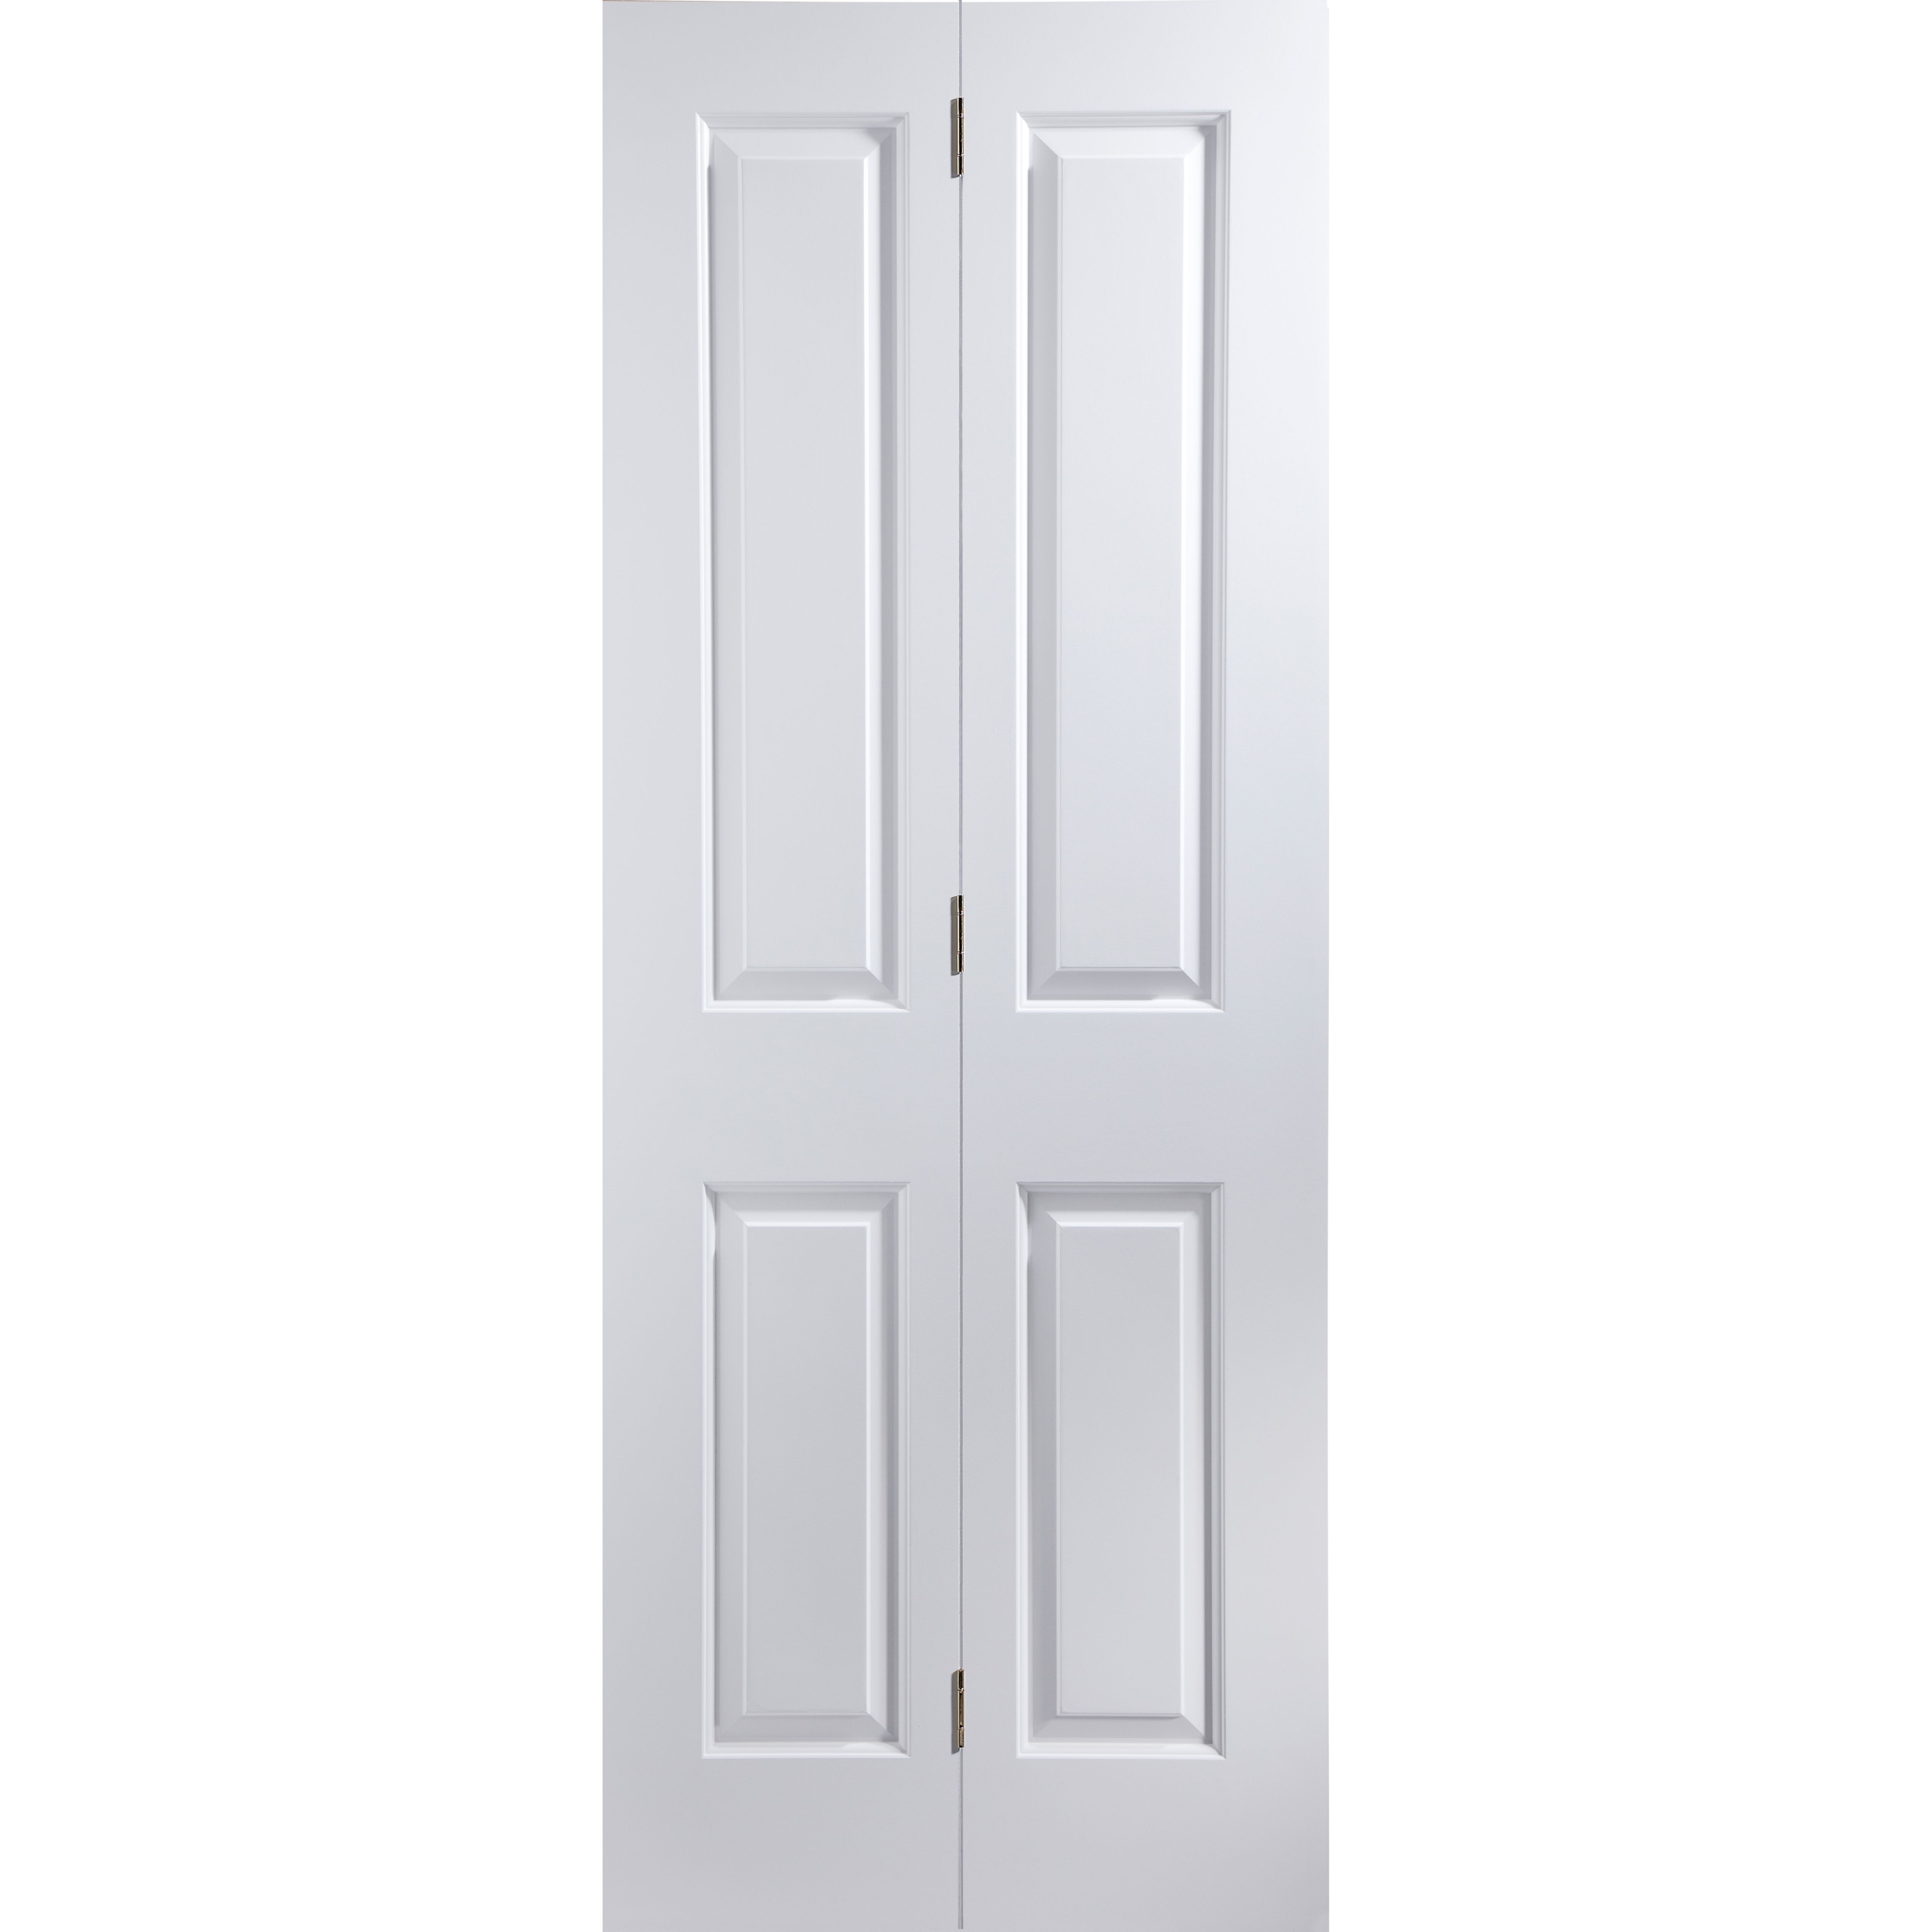 4 Panel Primed White Internal Bi Fold Door Set H 1950mm W 674mm